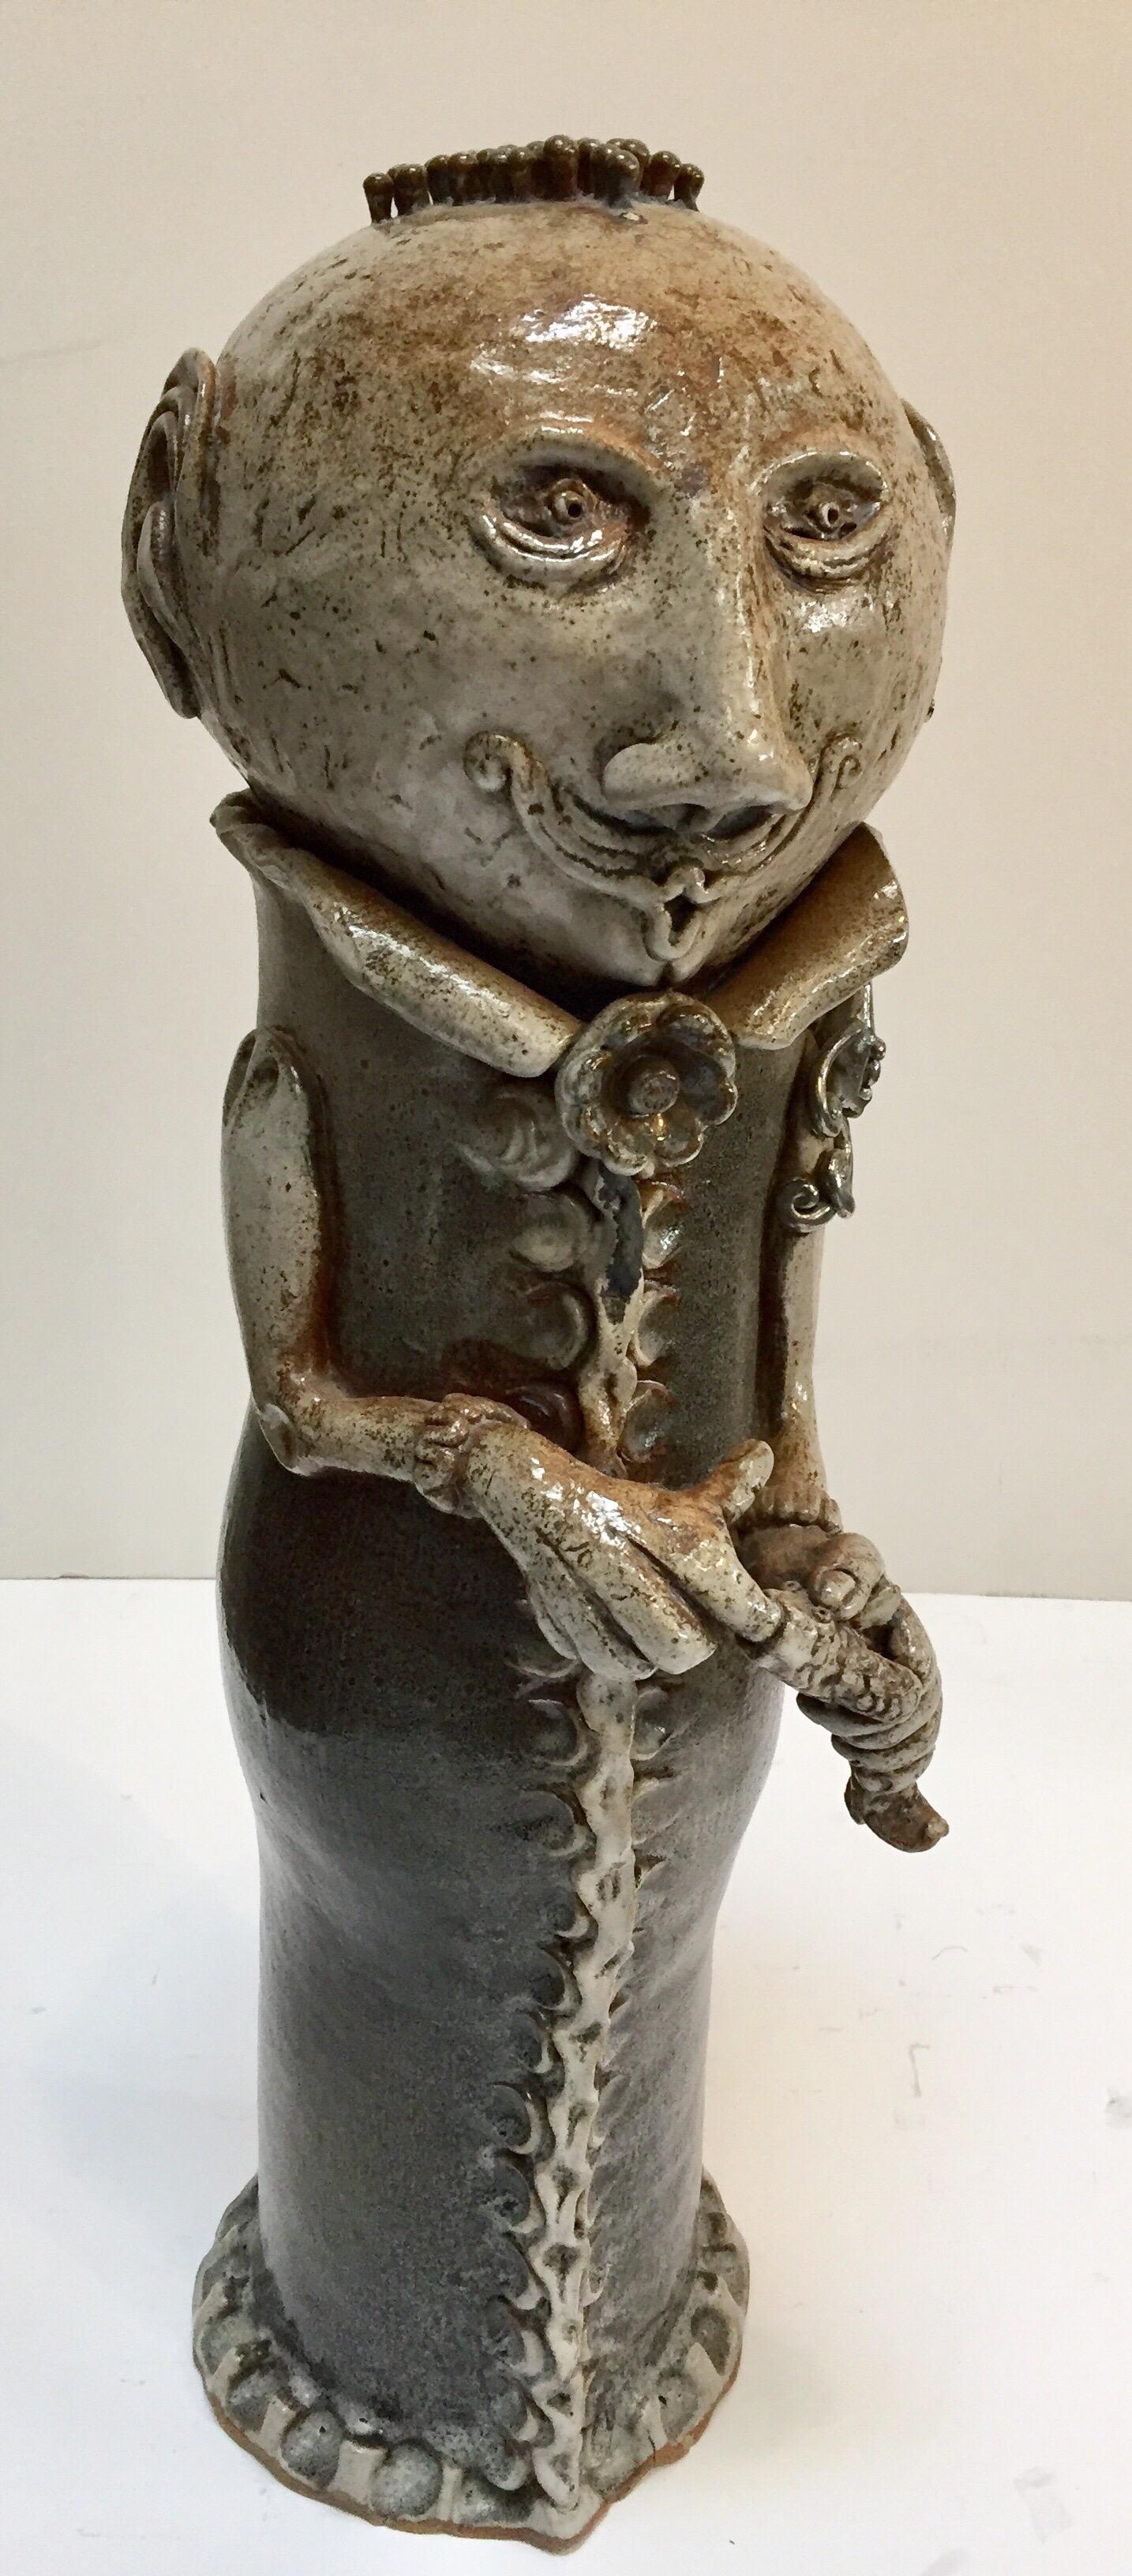 Art Studio Pop Brutalistische Fantasiefigur, signierte Keramik-Skulptur im Capron-Stil, signiert im Angebot 2